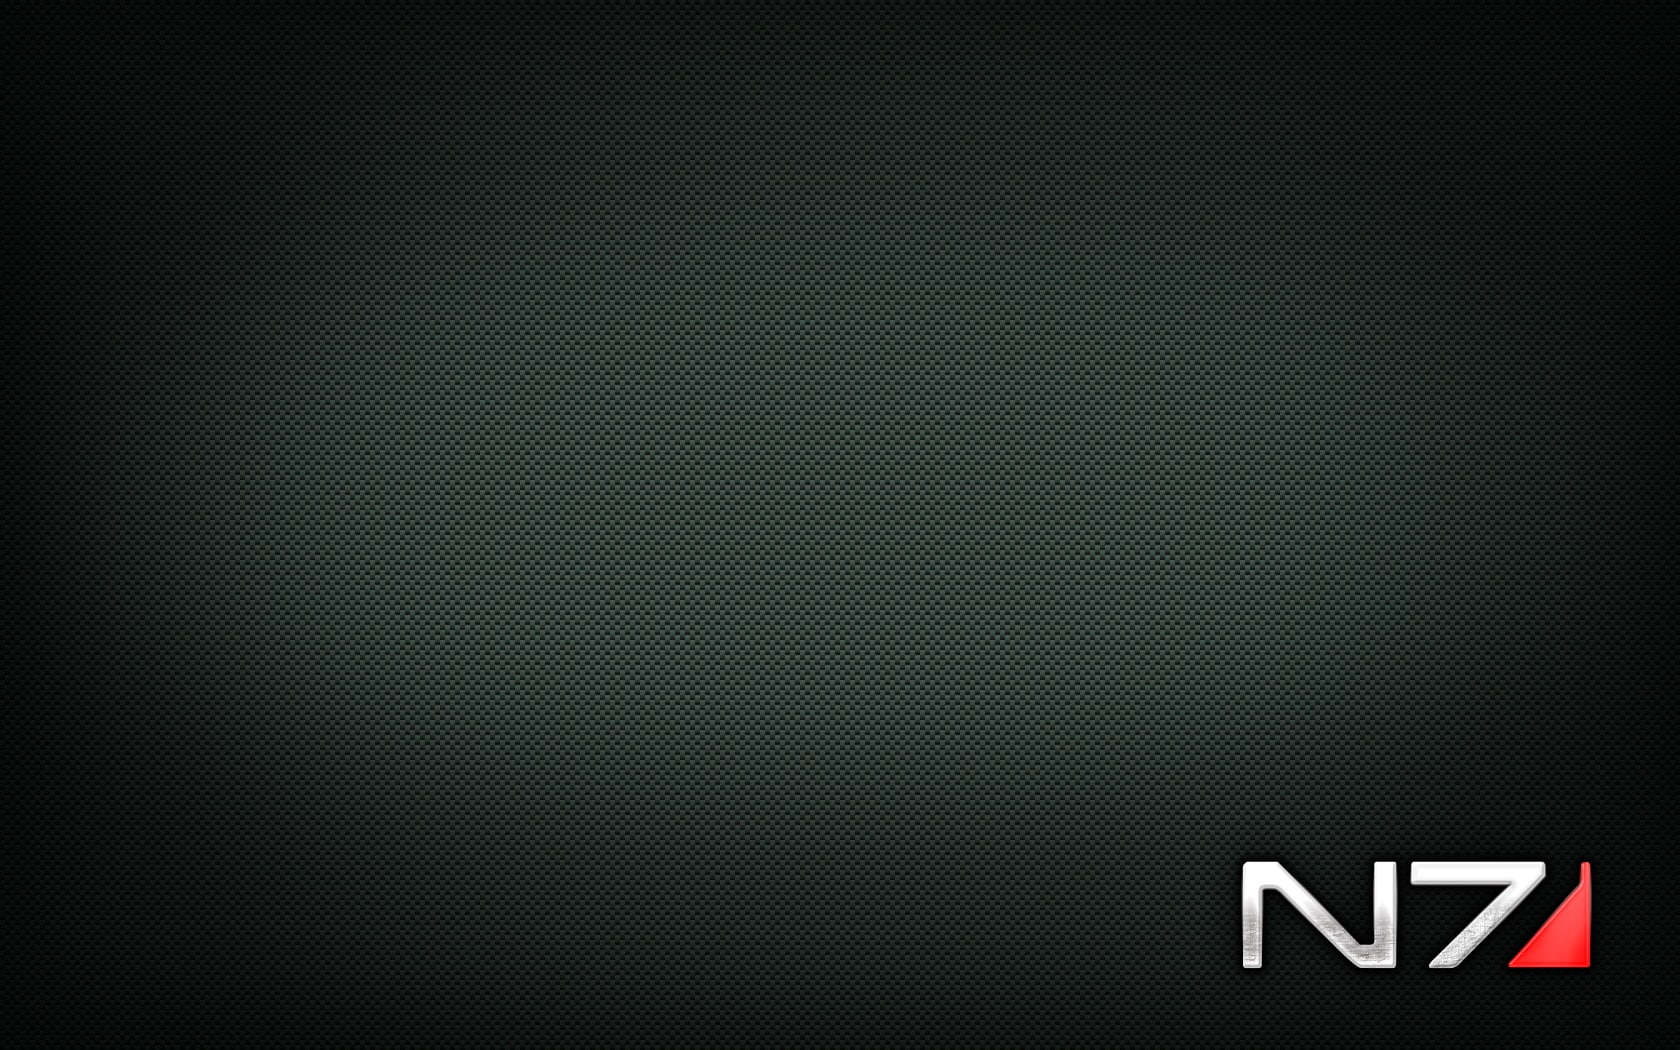 Black N7 Mass Effect HD, n7 logo, video games